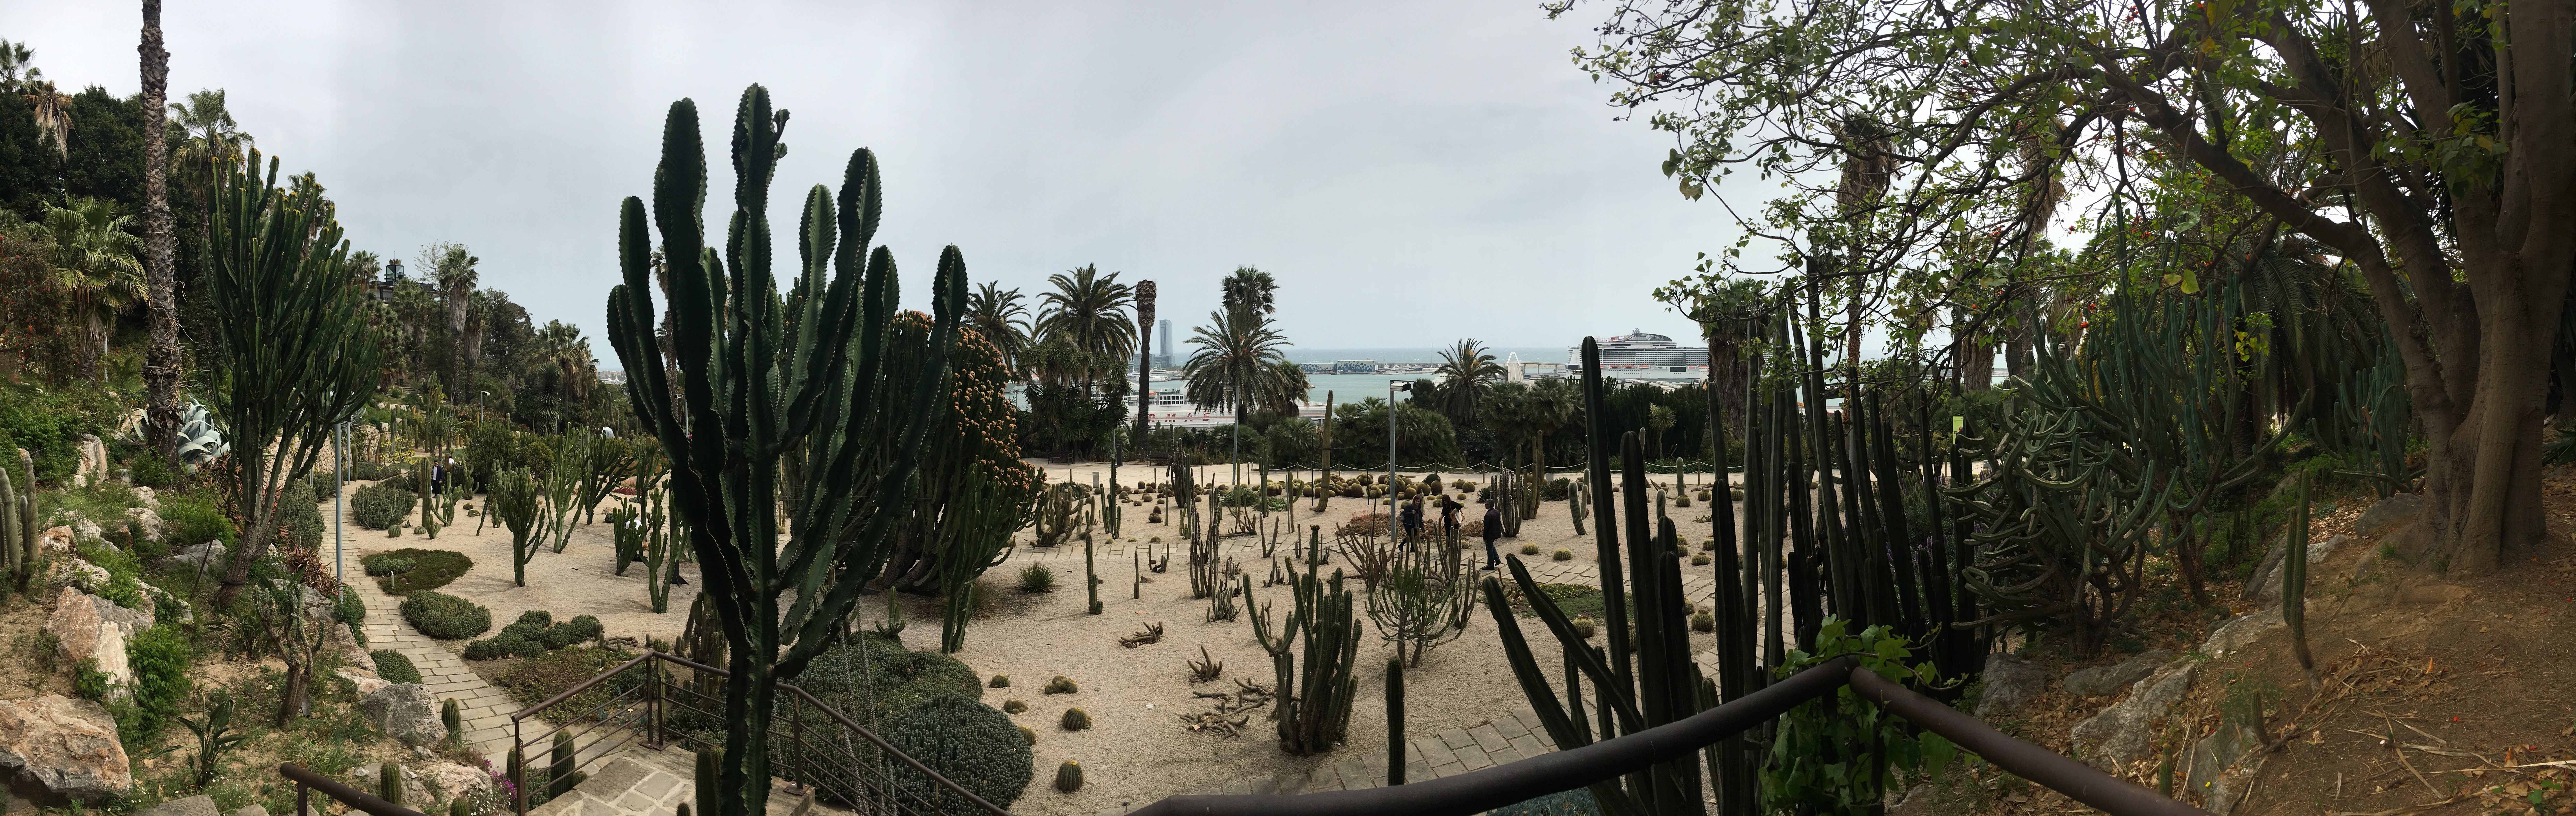 Costa i Llobera Gardens